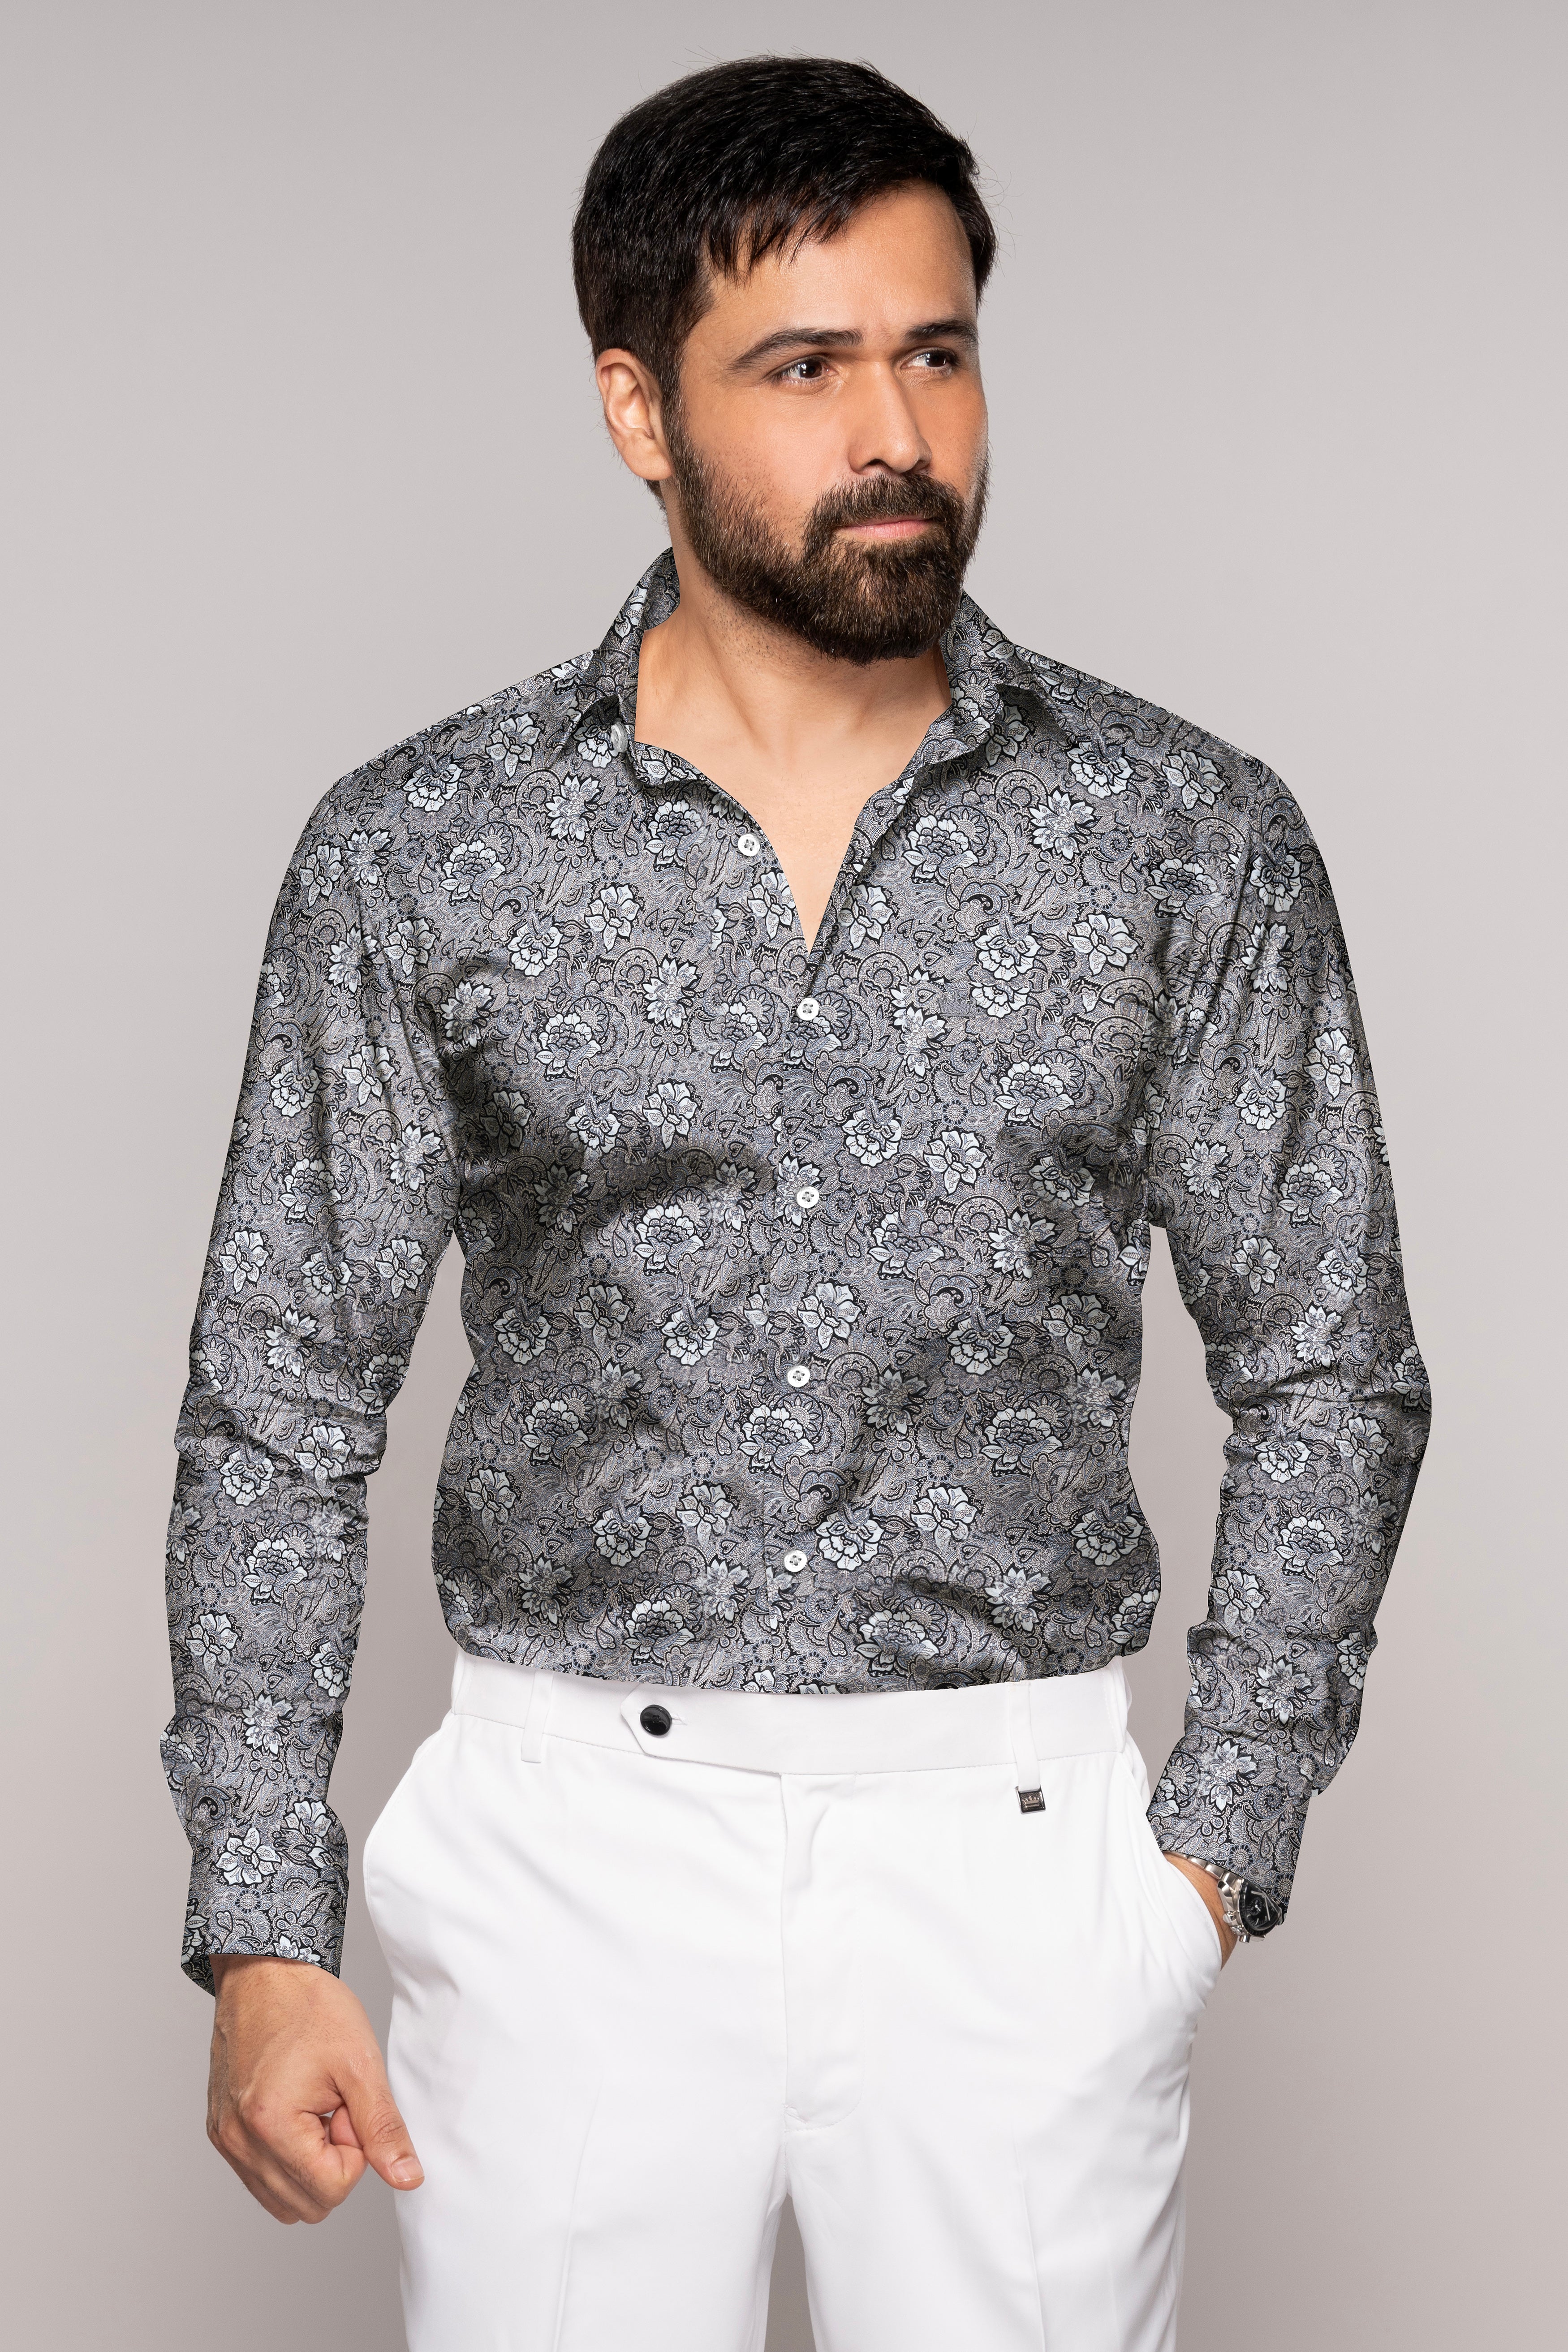 Mountain Mist Gray and Tuatara Brown Floral Printed Subtle Sheen Super Soft Premium Cotton Shirt